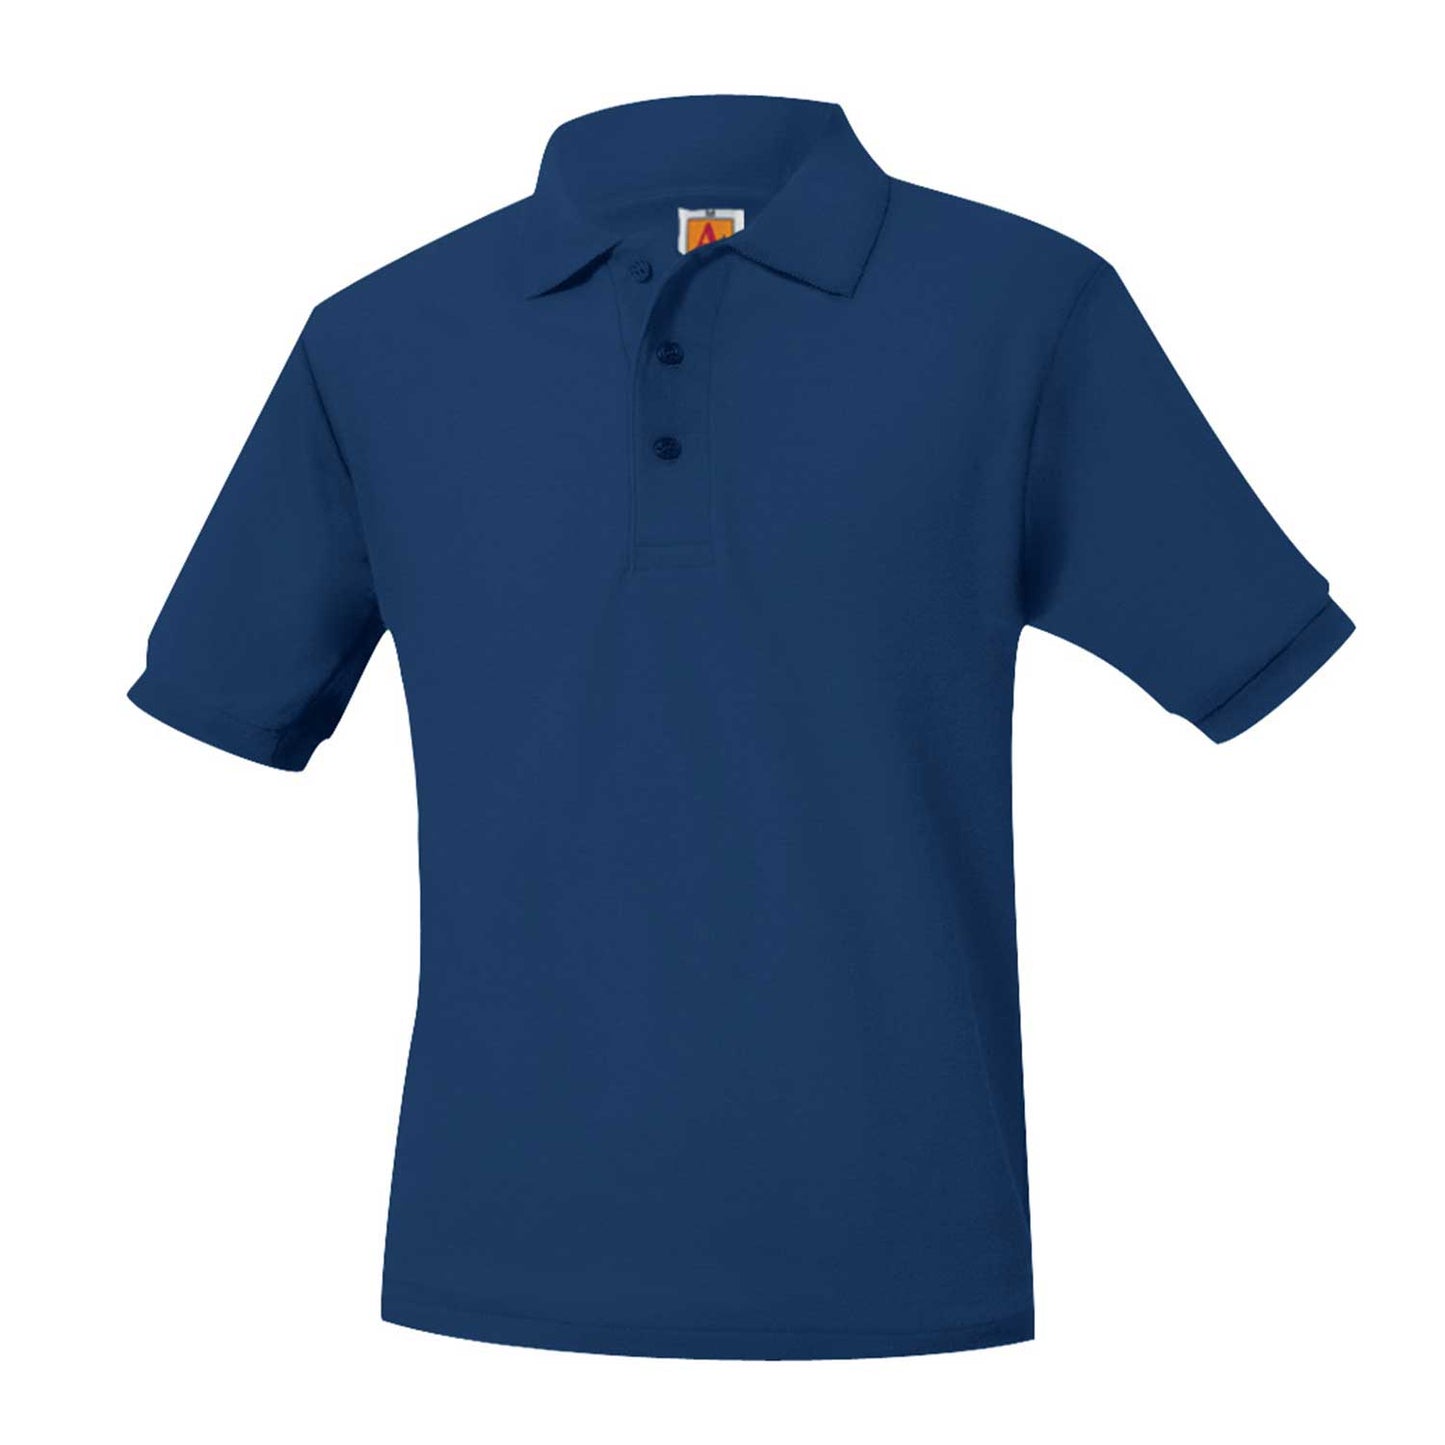 Men's/Unisex Pique Polo Shirt, Short Sleeves, Ribbed Cuffs - 1206